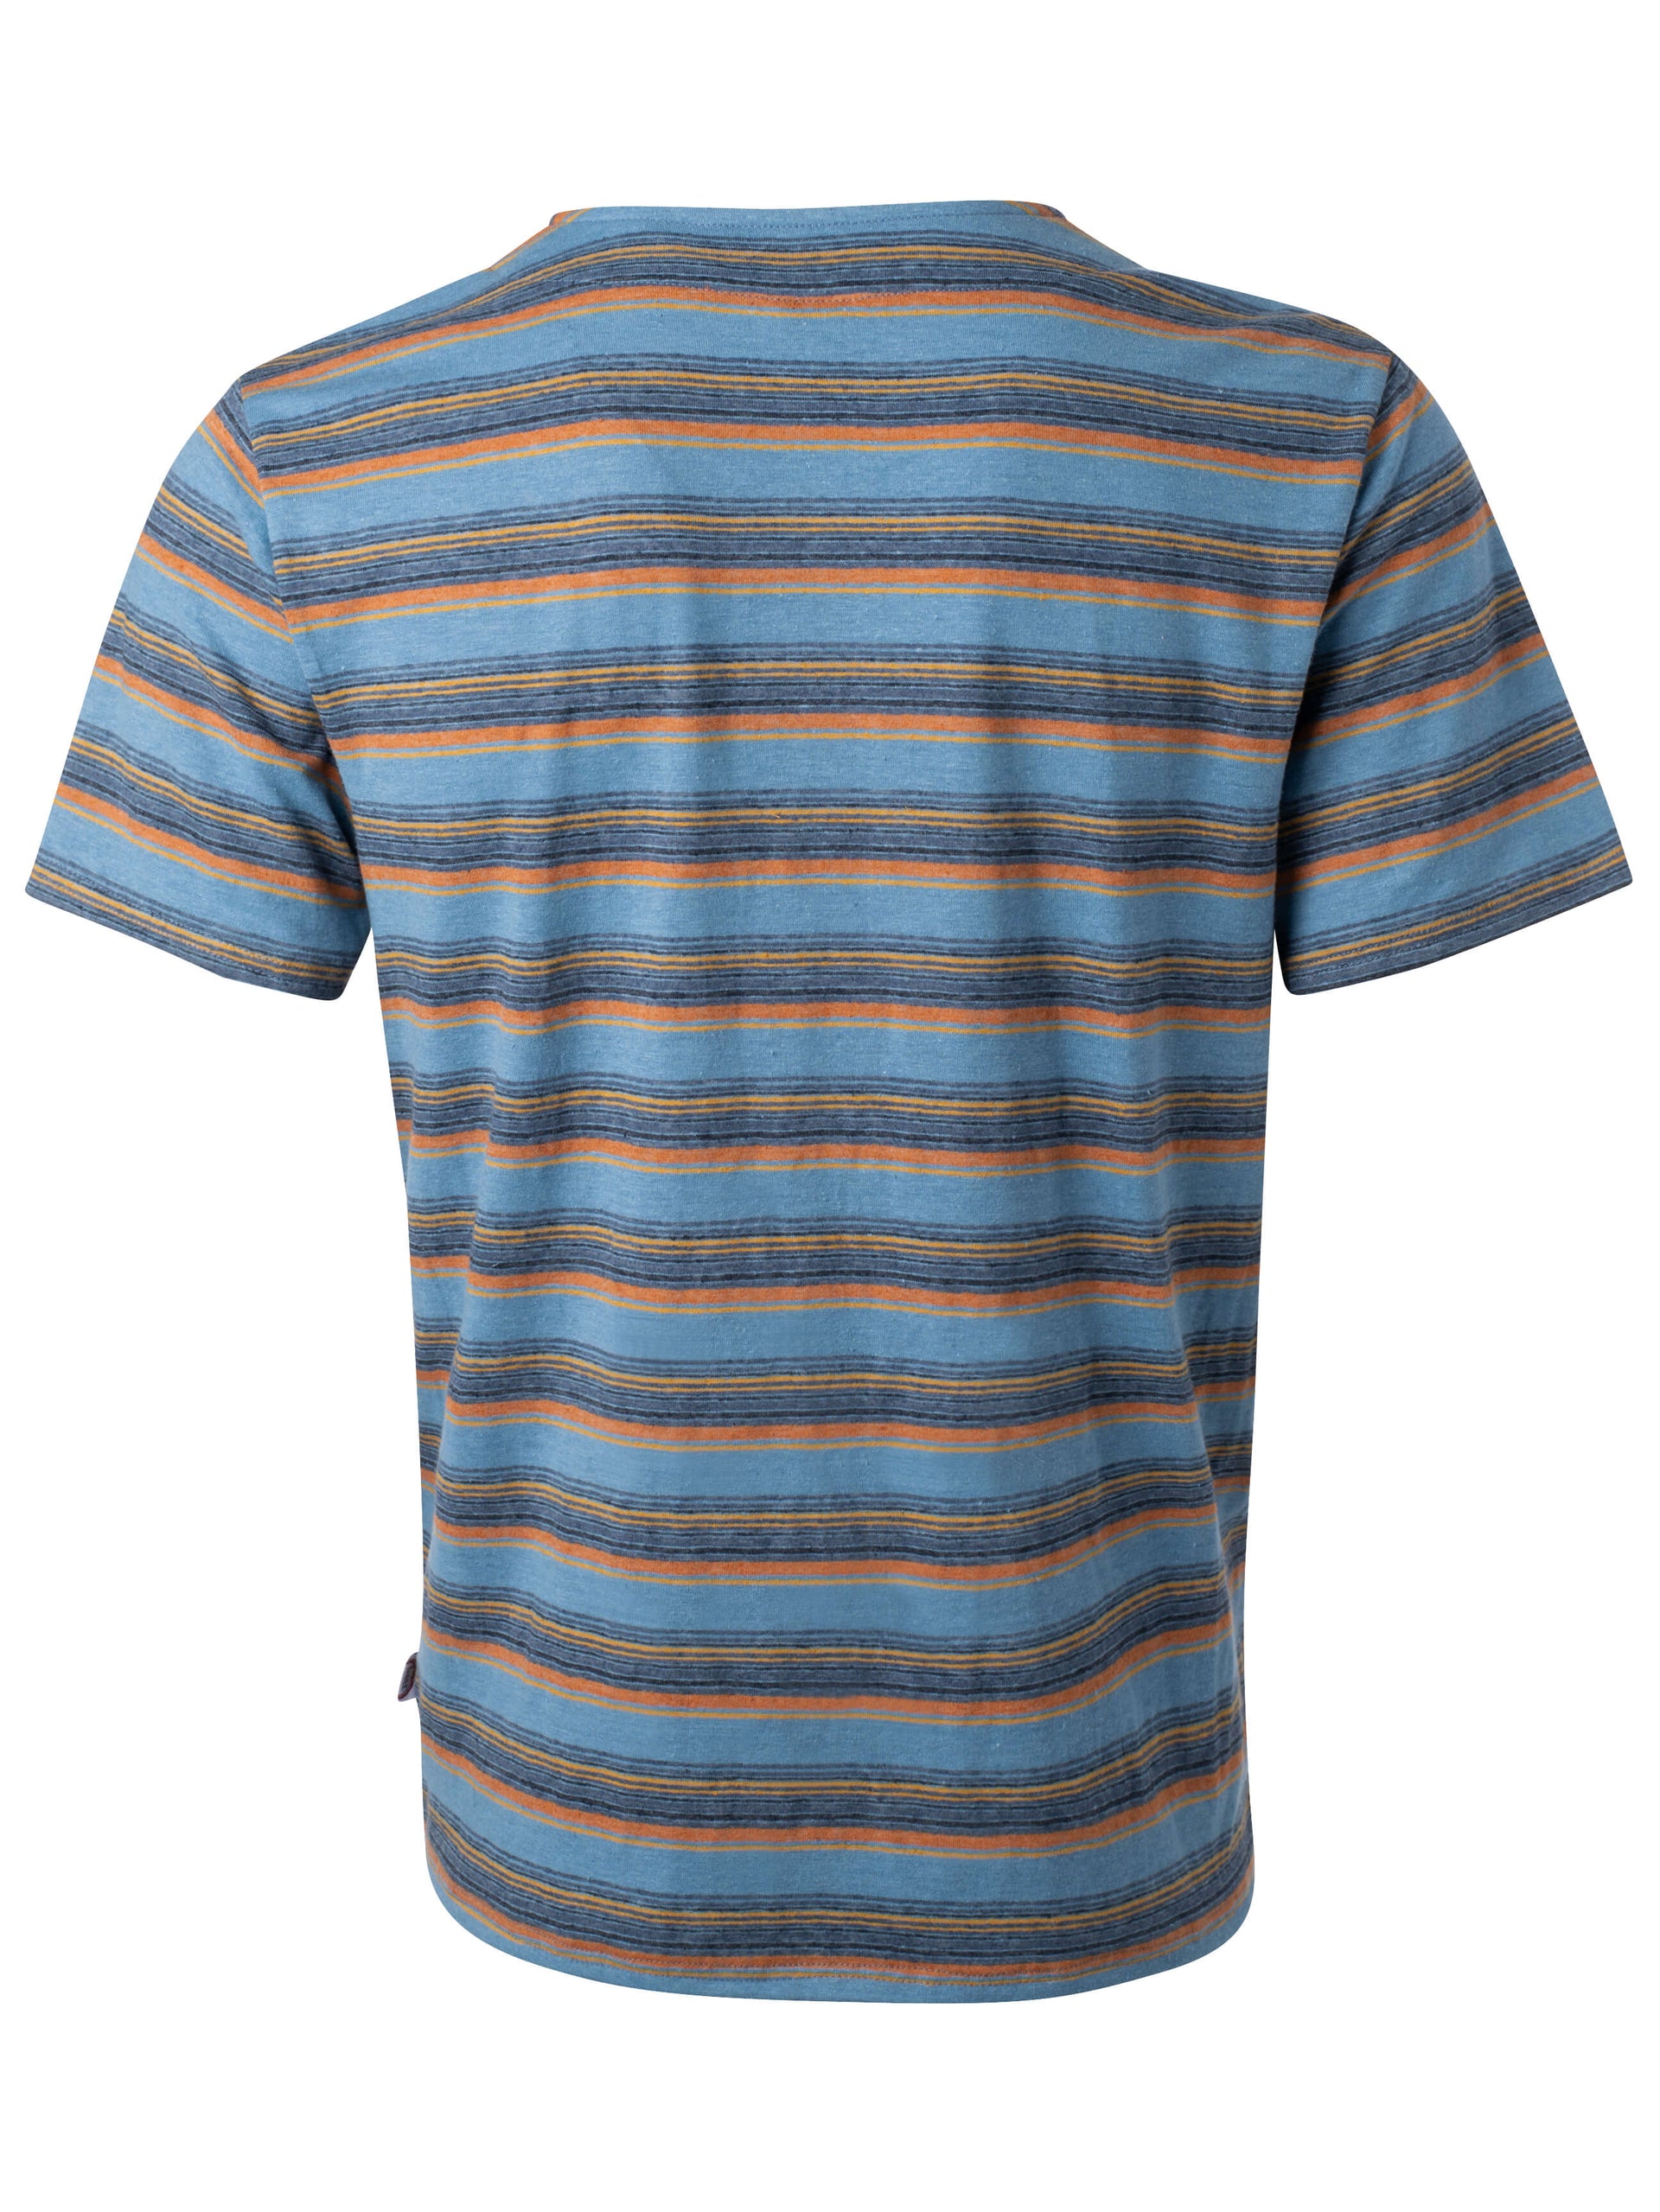 T-shirt-SURF bleu raye-chanvre coton bio-bleu-unisexe-ghost dos-F2251